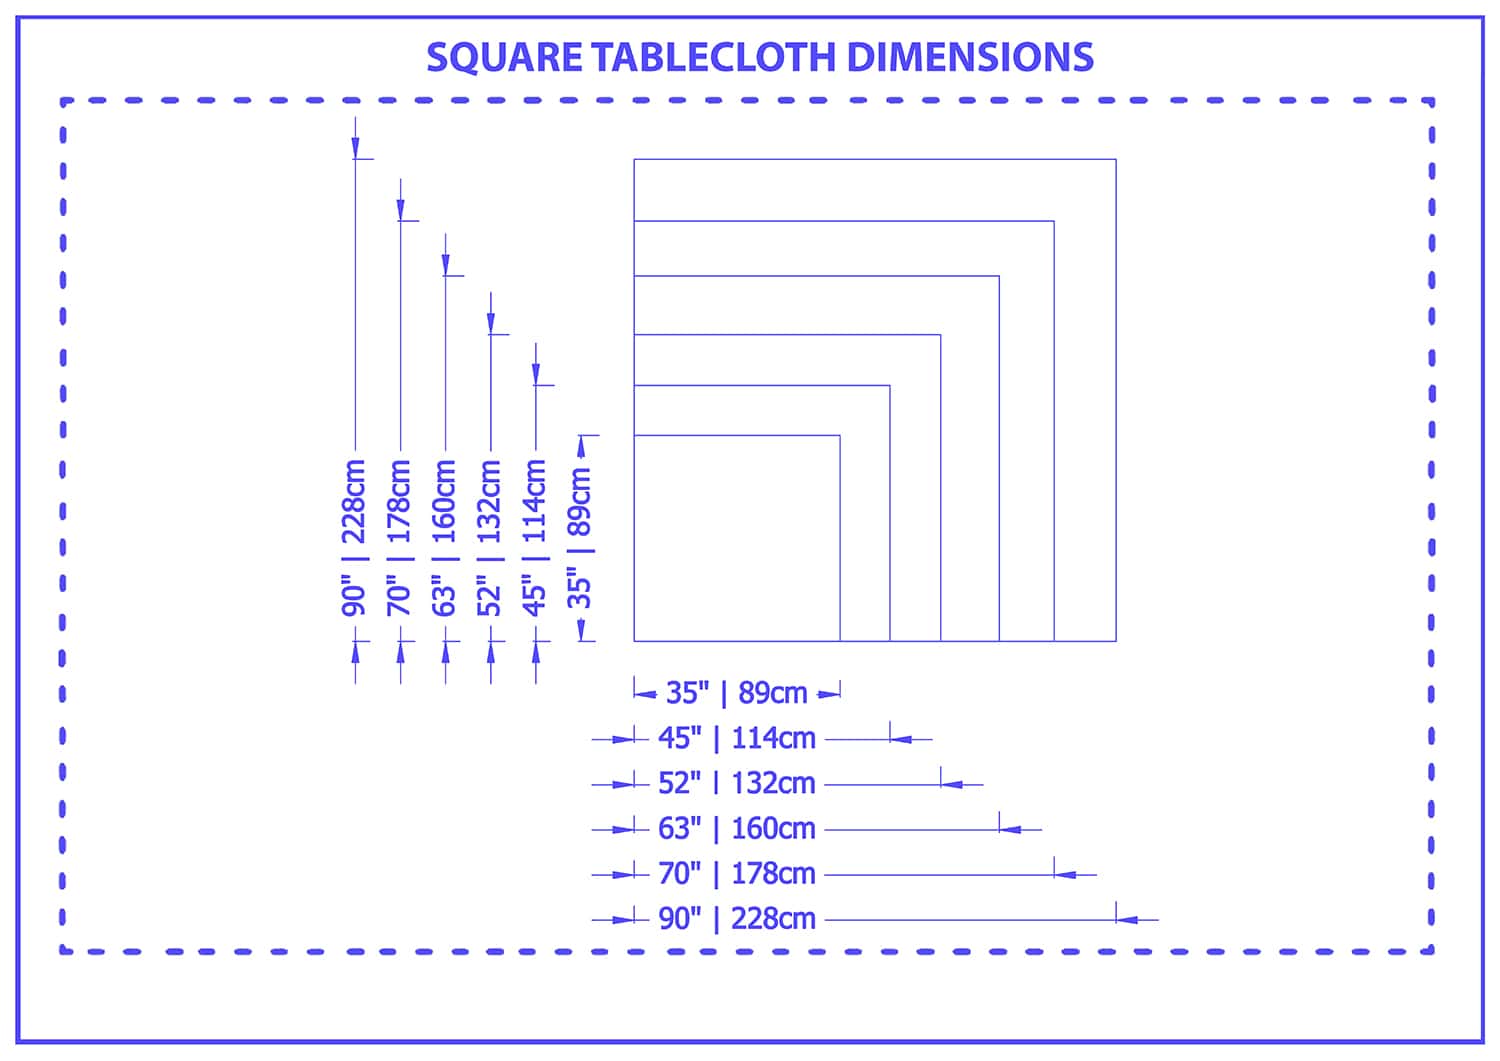 Square tablecloth dimensions